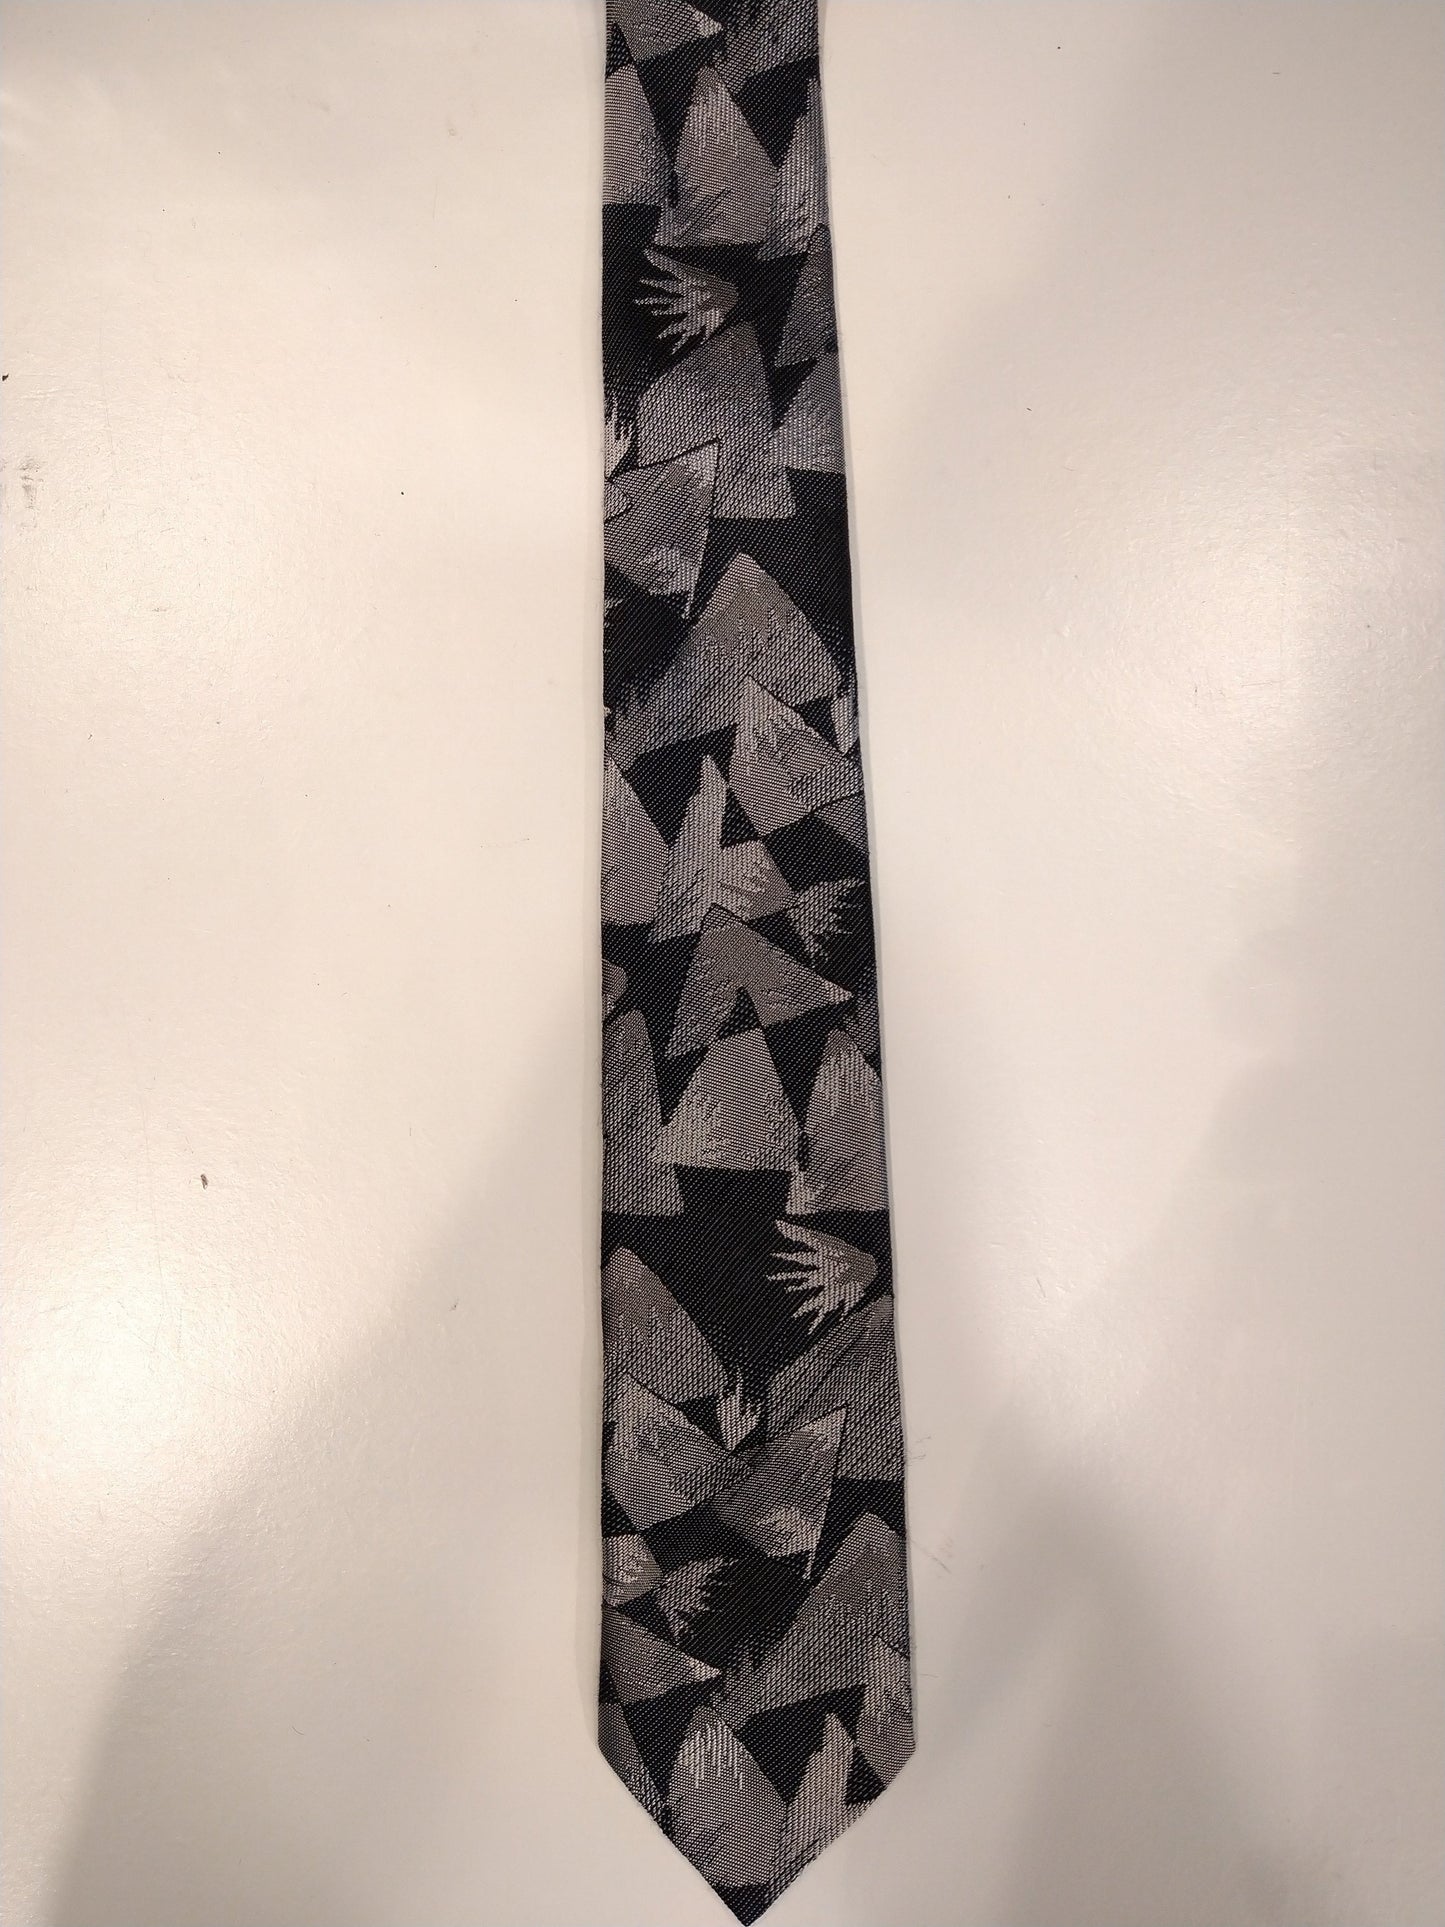 Vintage skat extra narrow tie. Black gray motif.